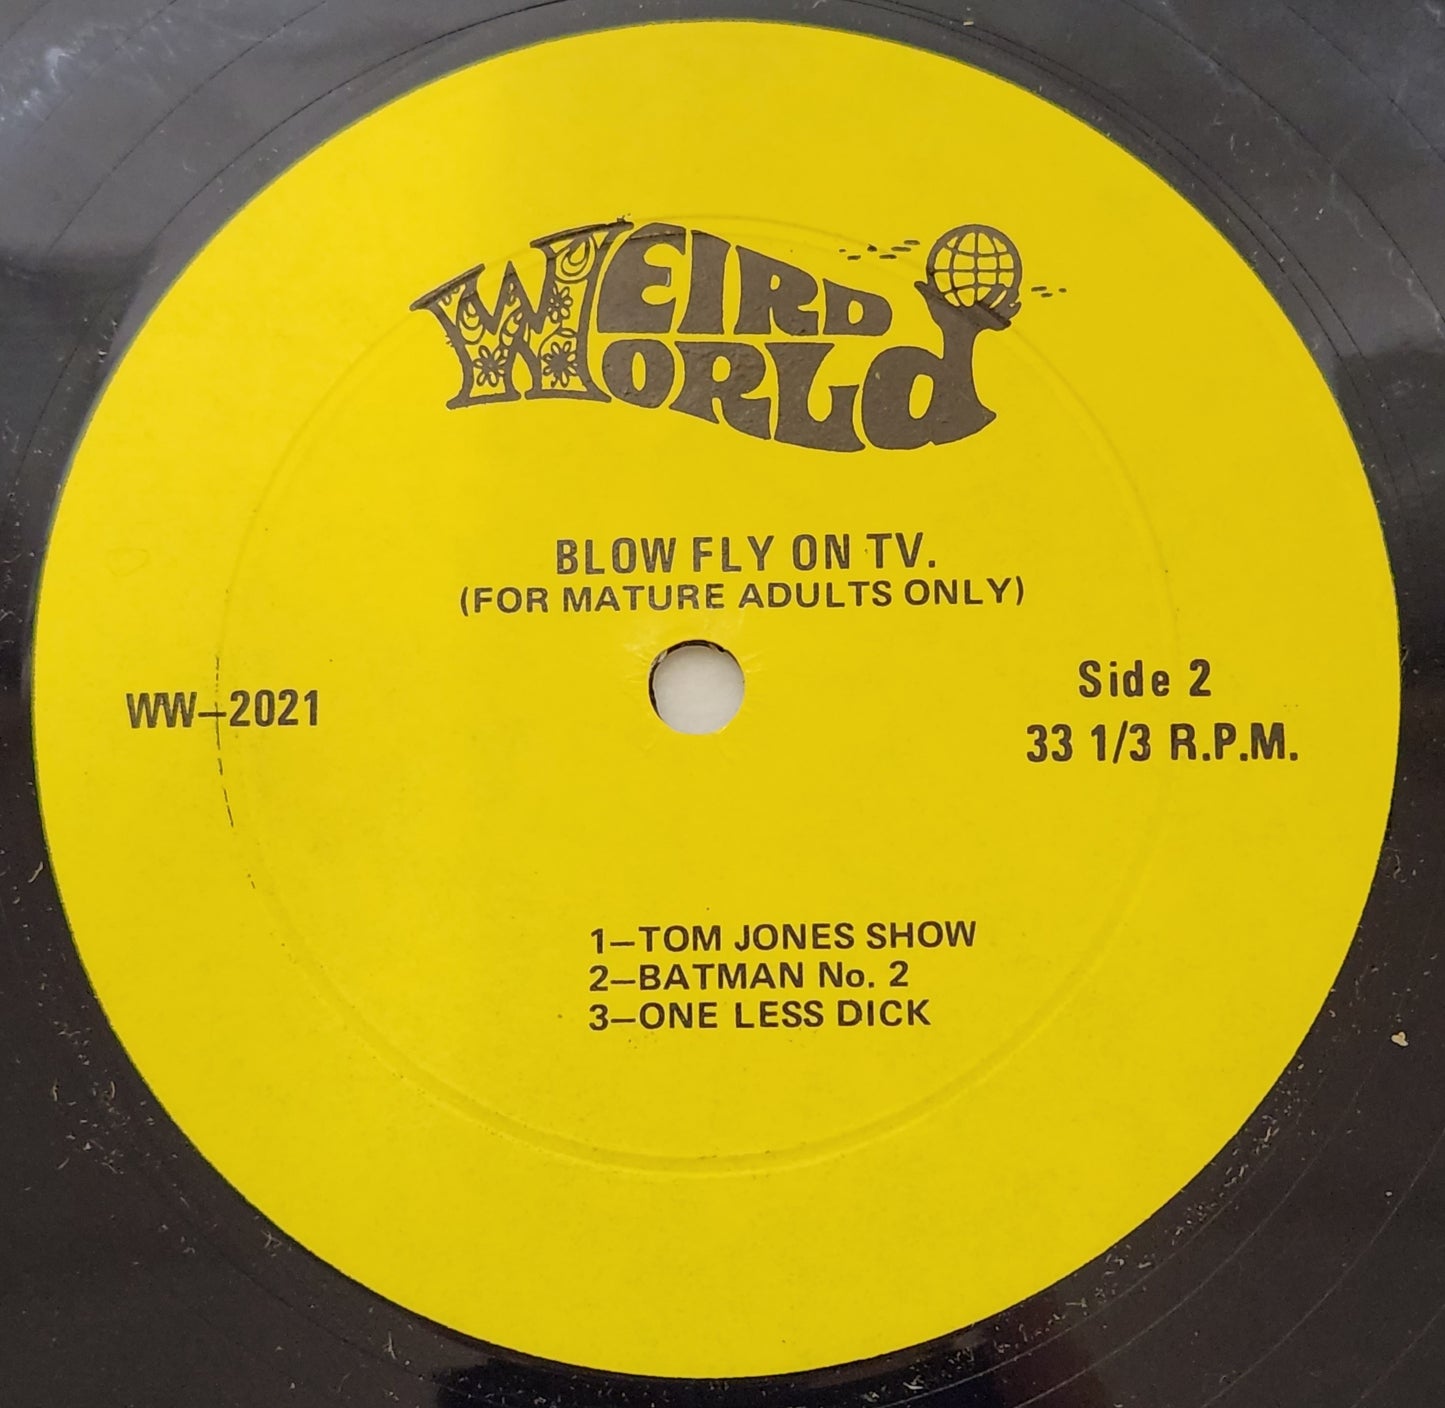 Blowfly "Blowfly On TV" 1974 Erotic Funk & Soul Record Album